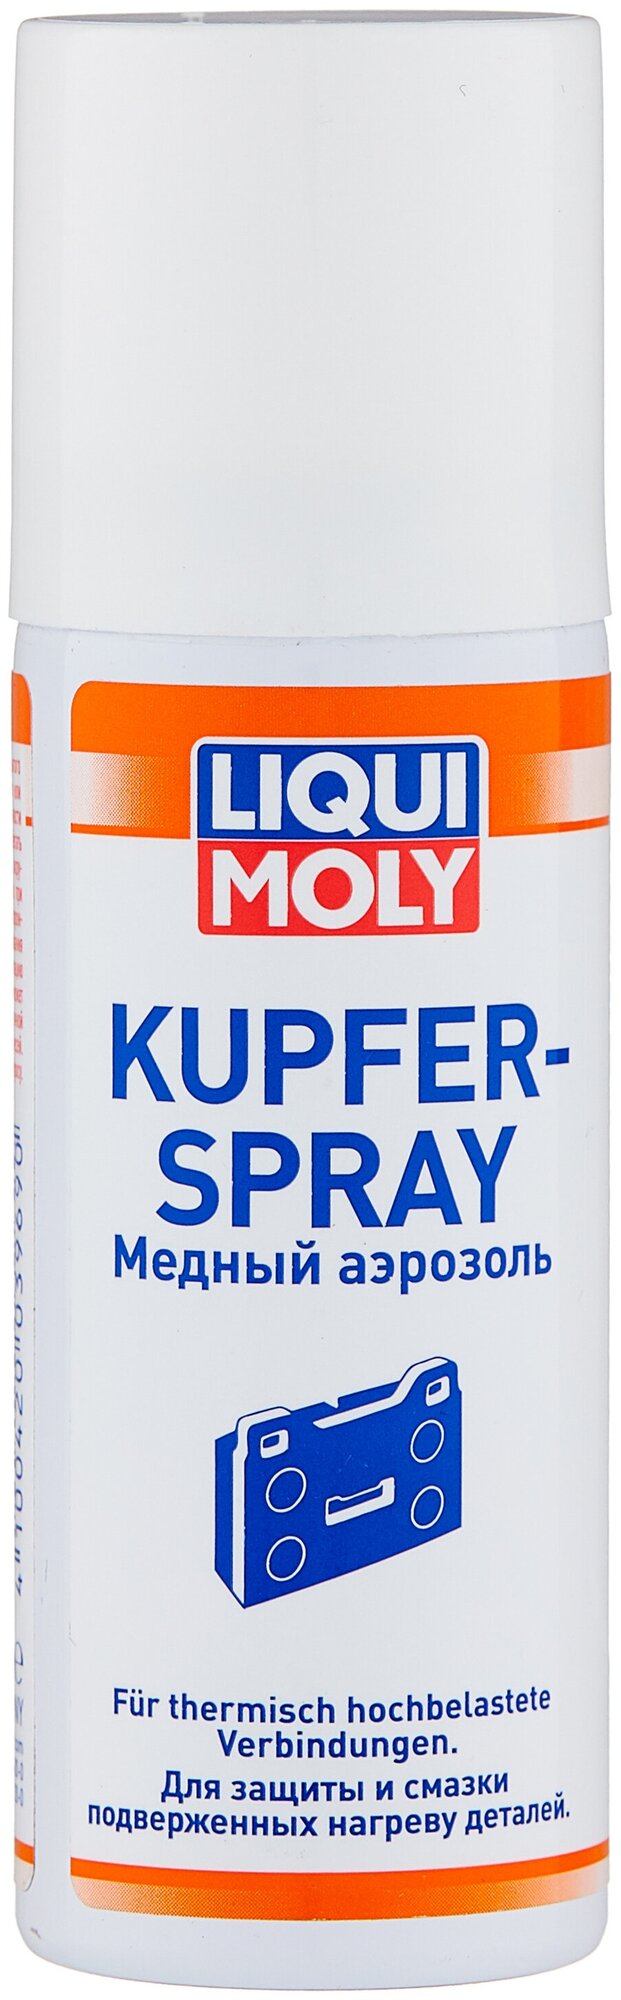   Liqui Moly Kupfer-Spray 0.05 